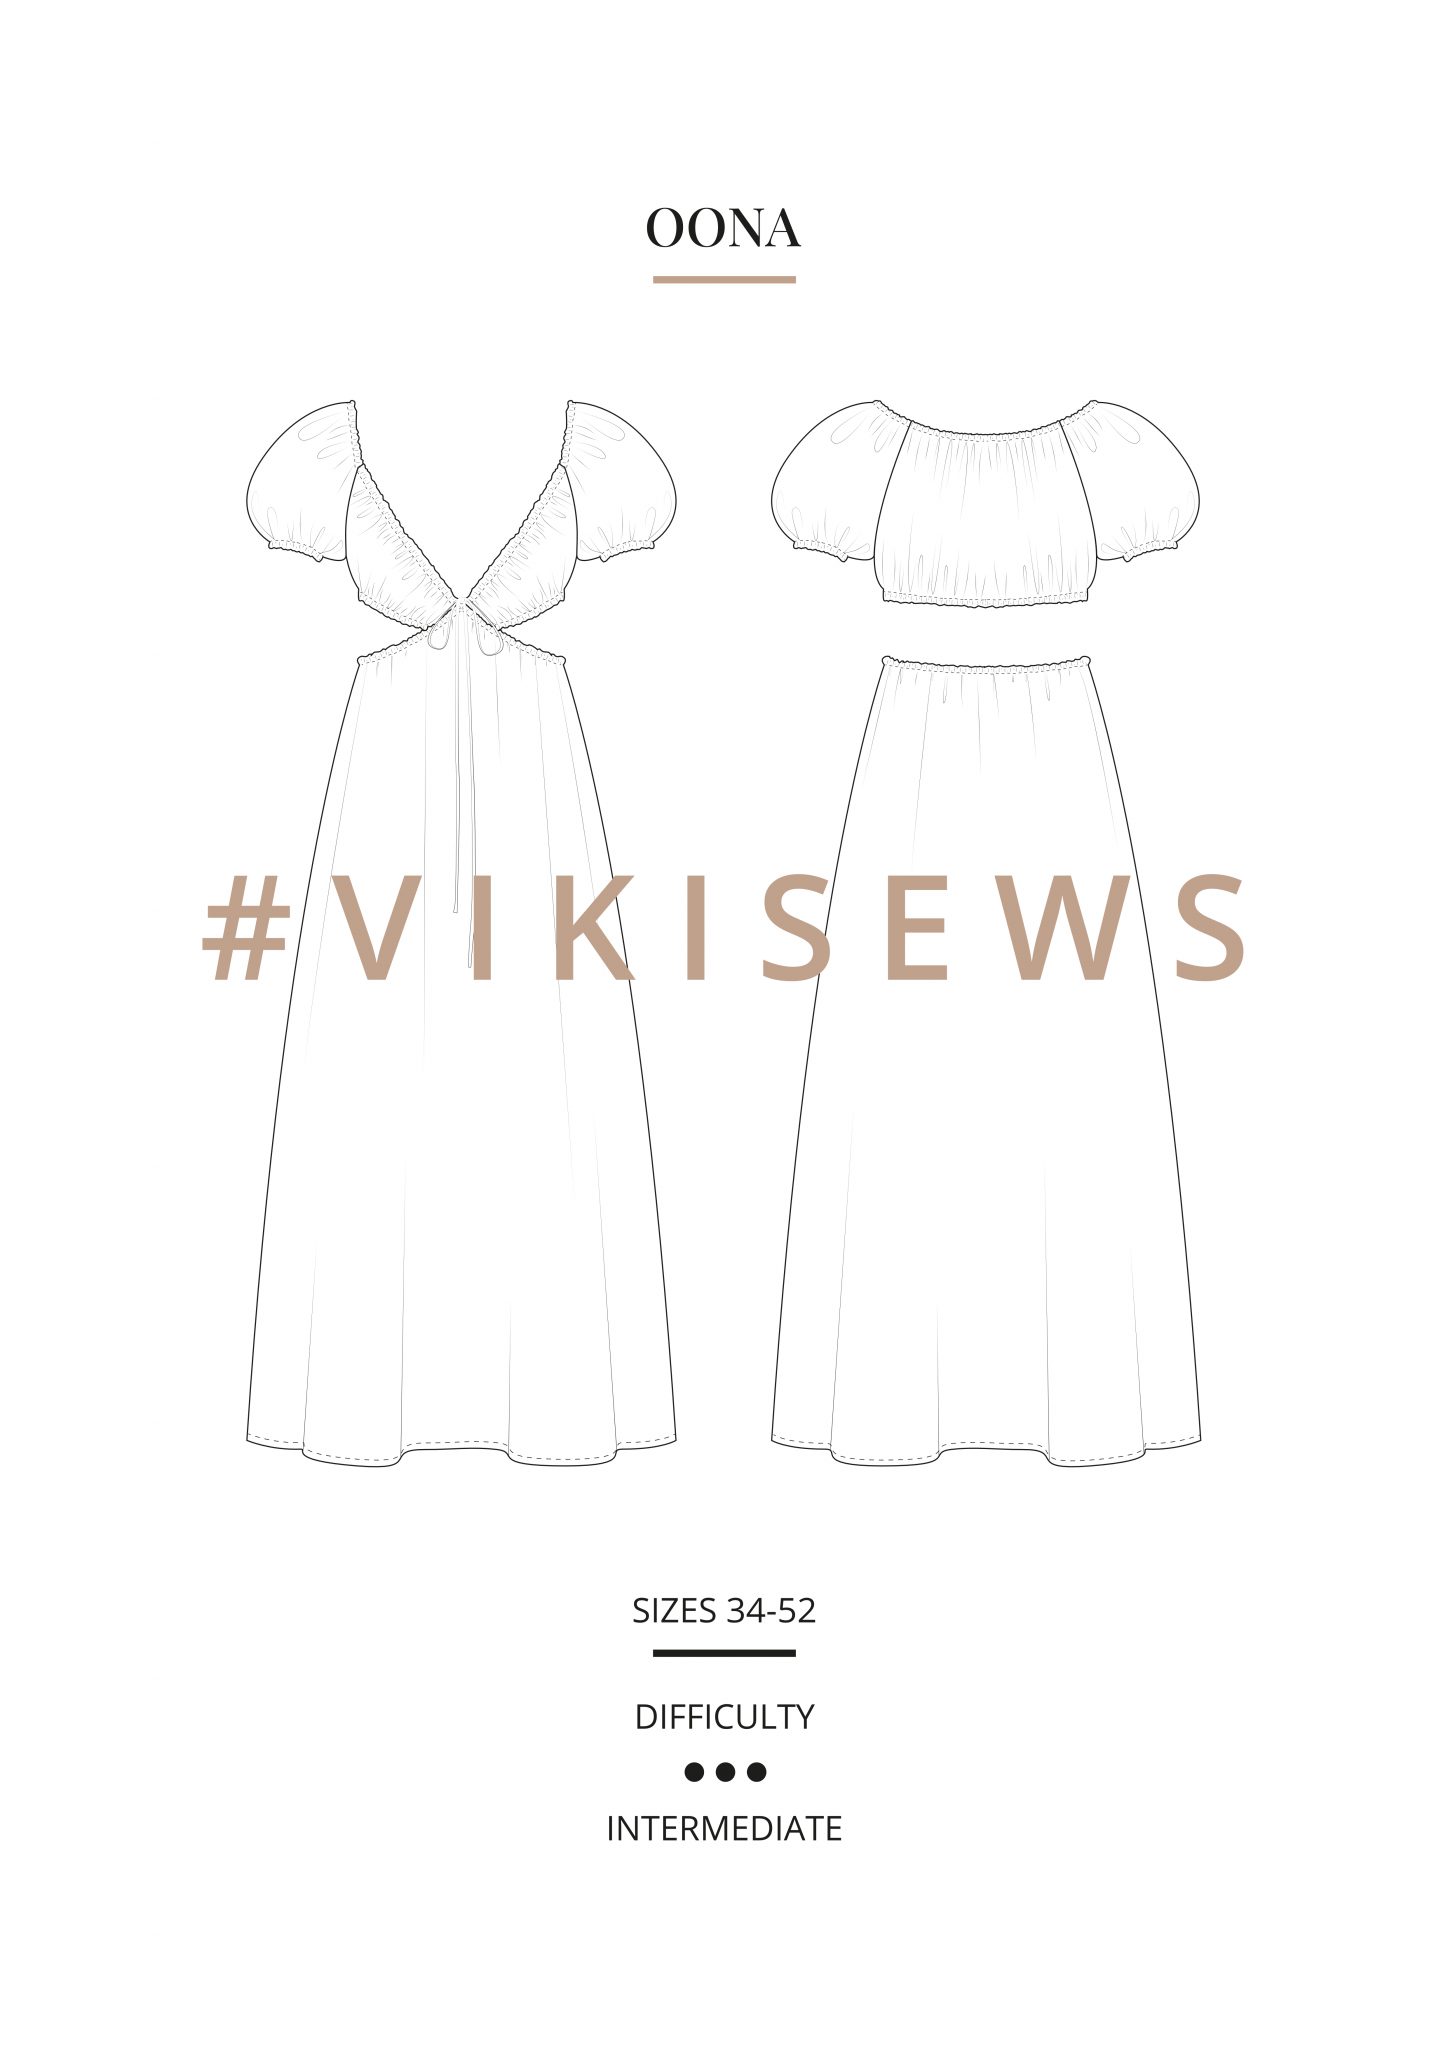 Vikisews Oona Dress PDF - The Fold Line